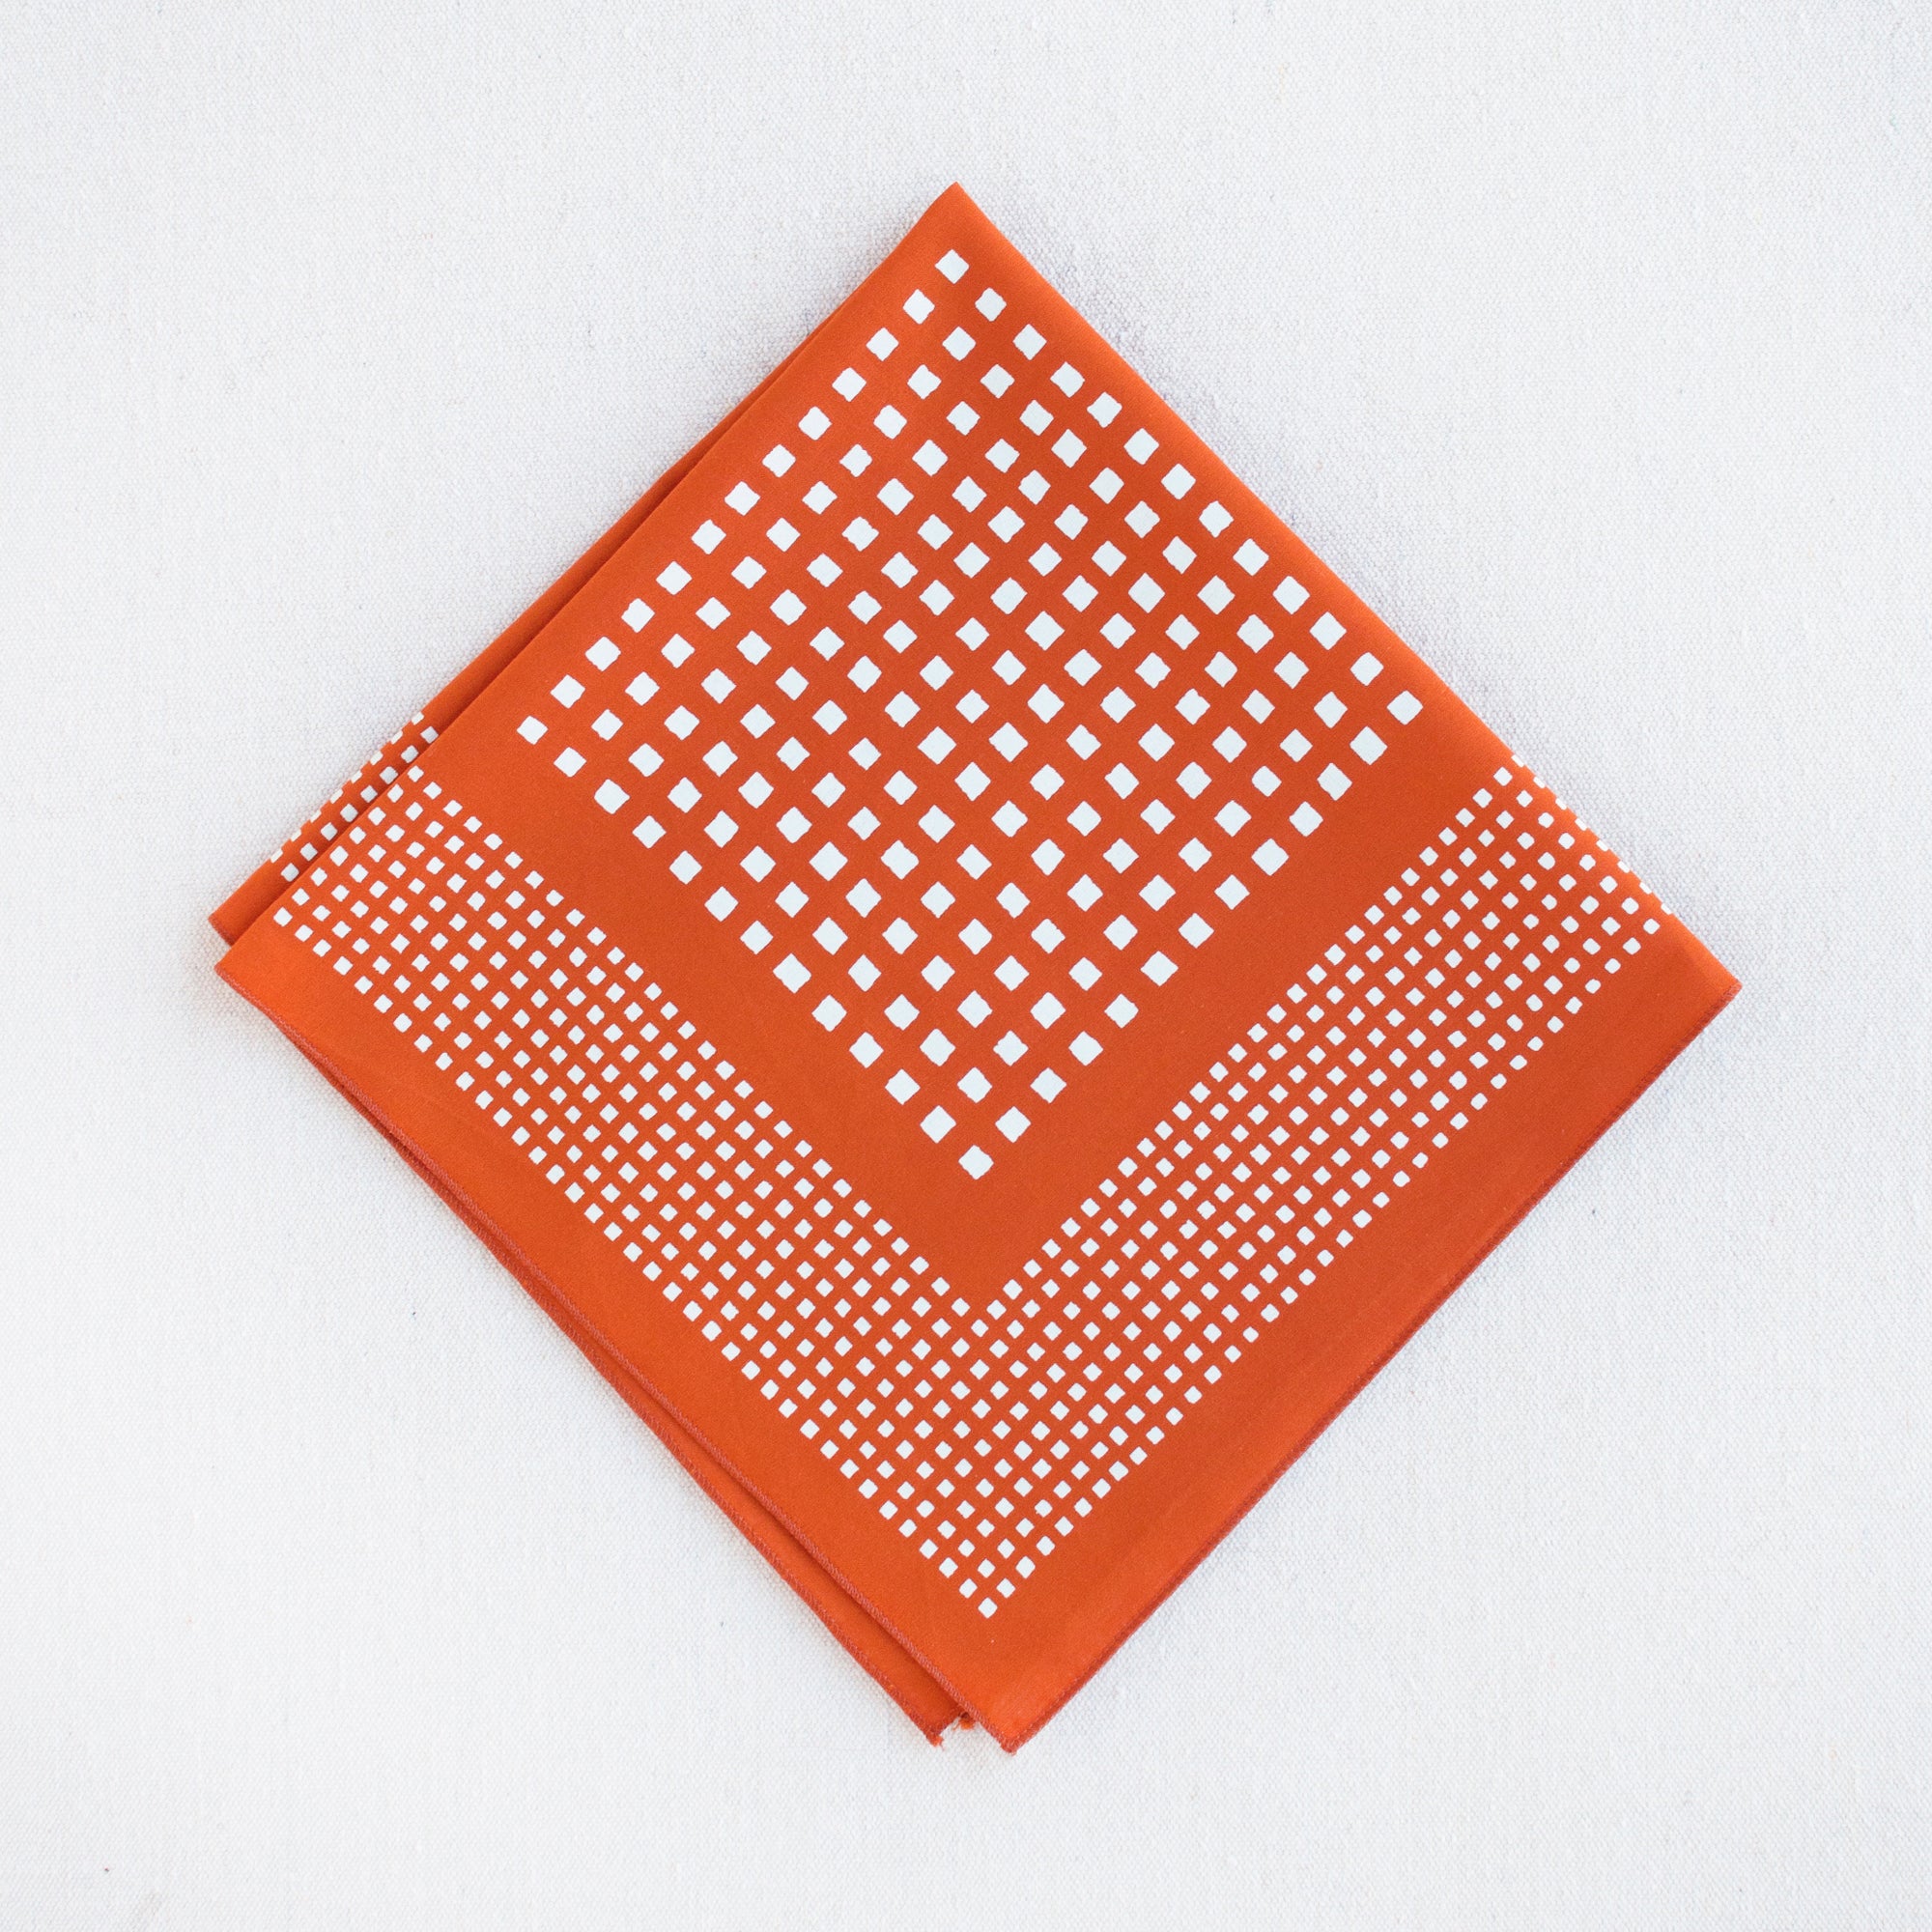 Burnt orange bandana with a white geometric pattern composed of squares. Folded into quarters. By Abracadana